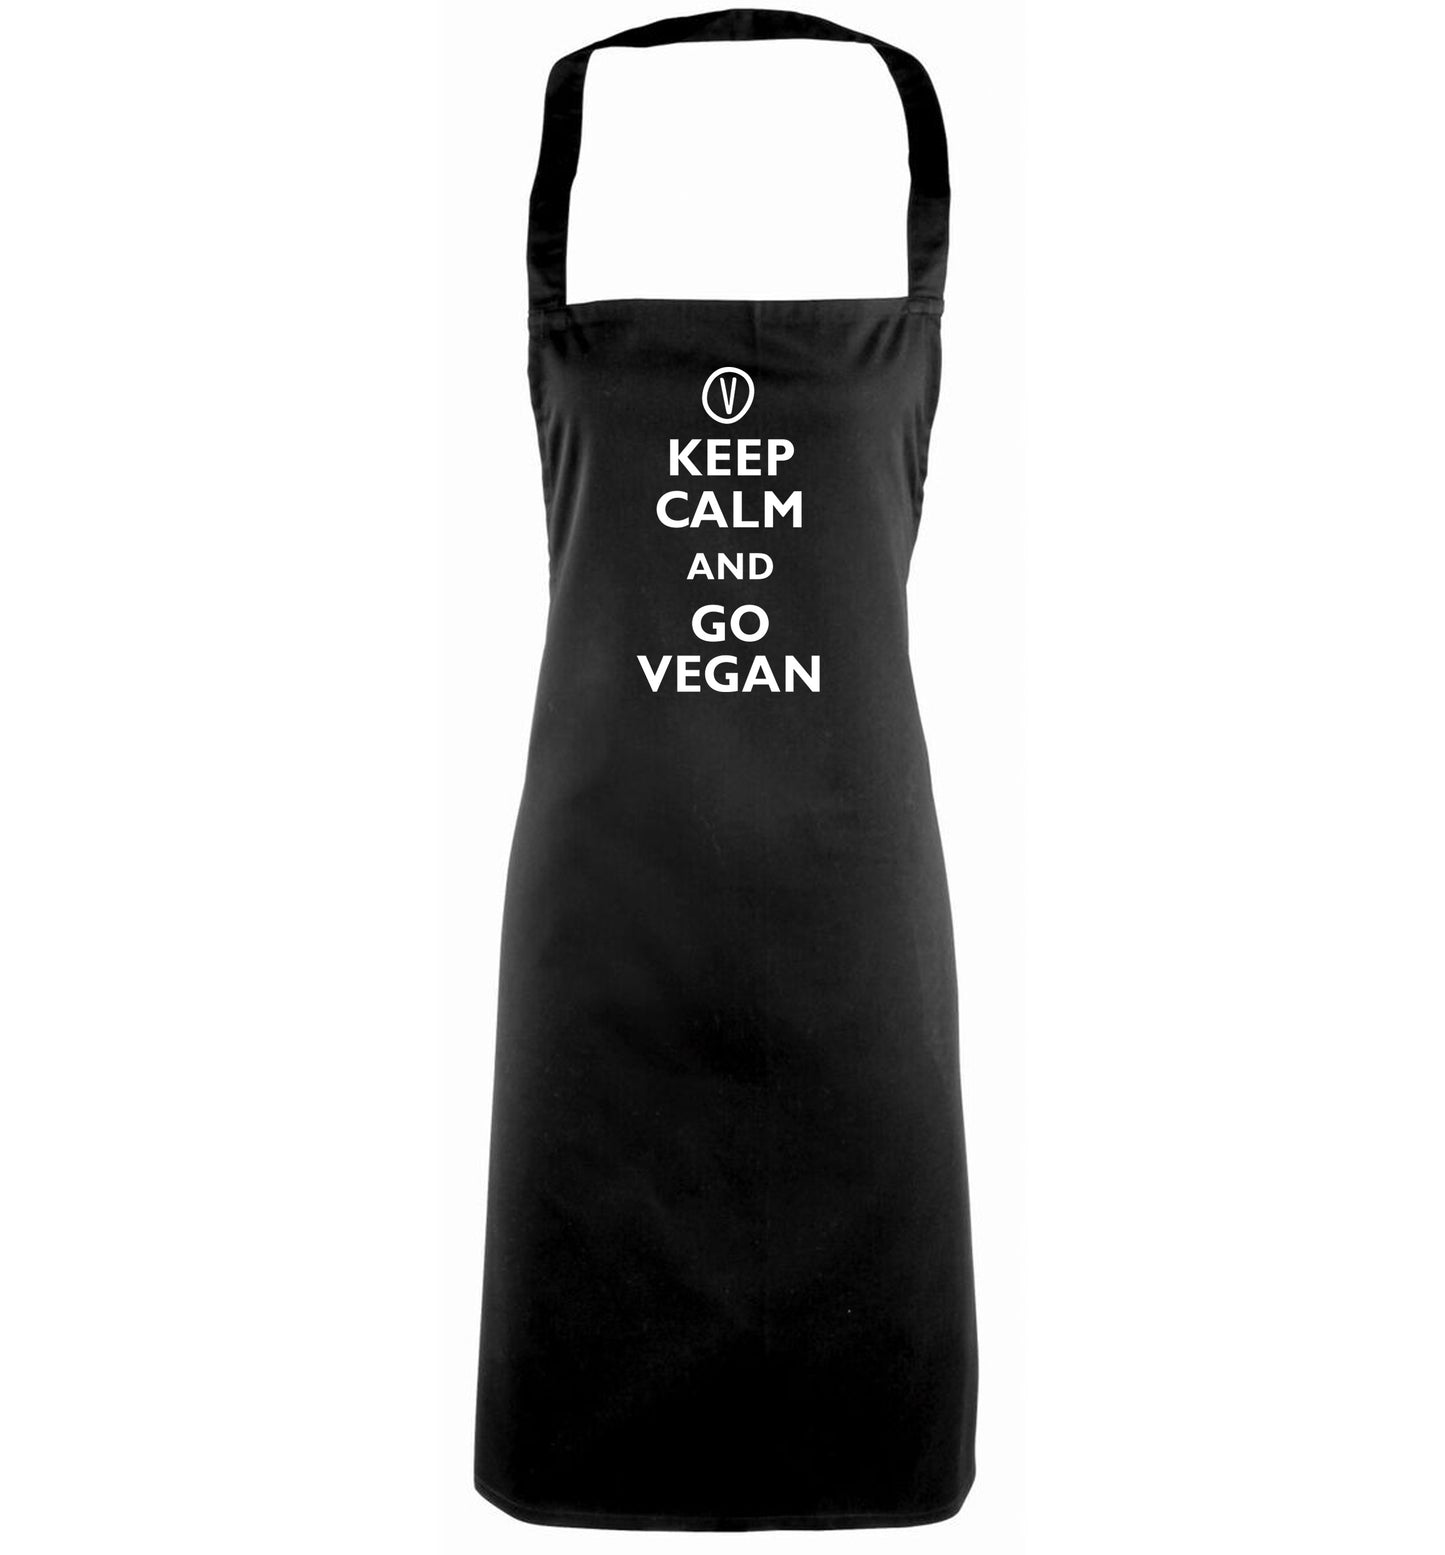 Keep calm and go vegan black apron